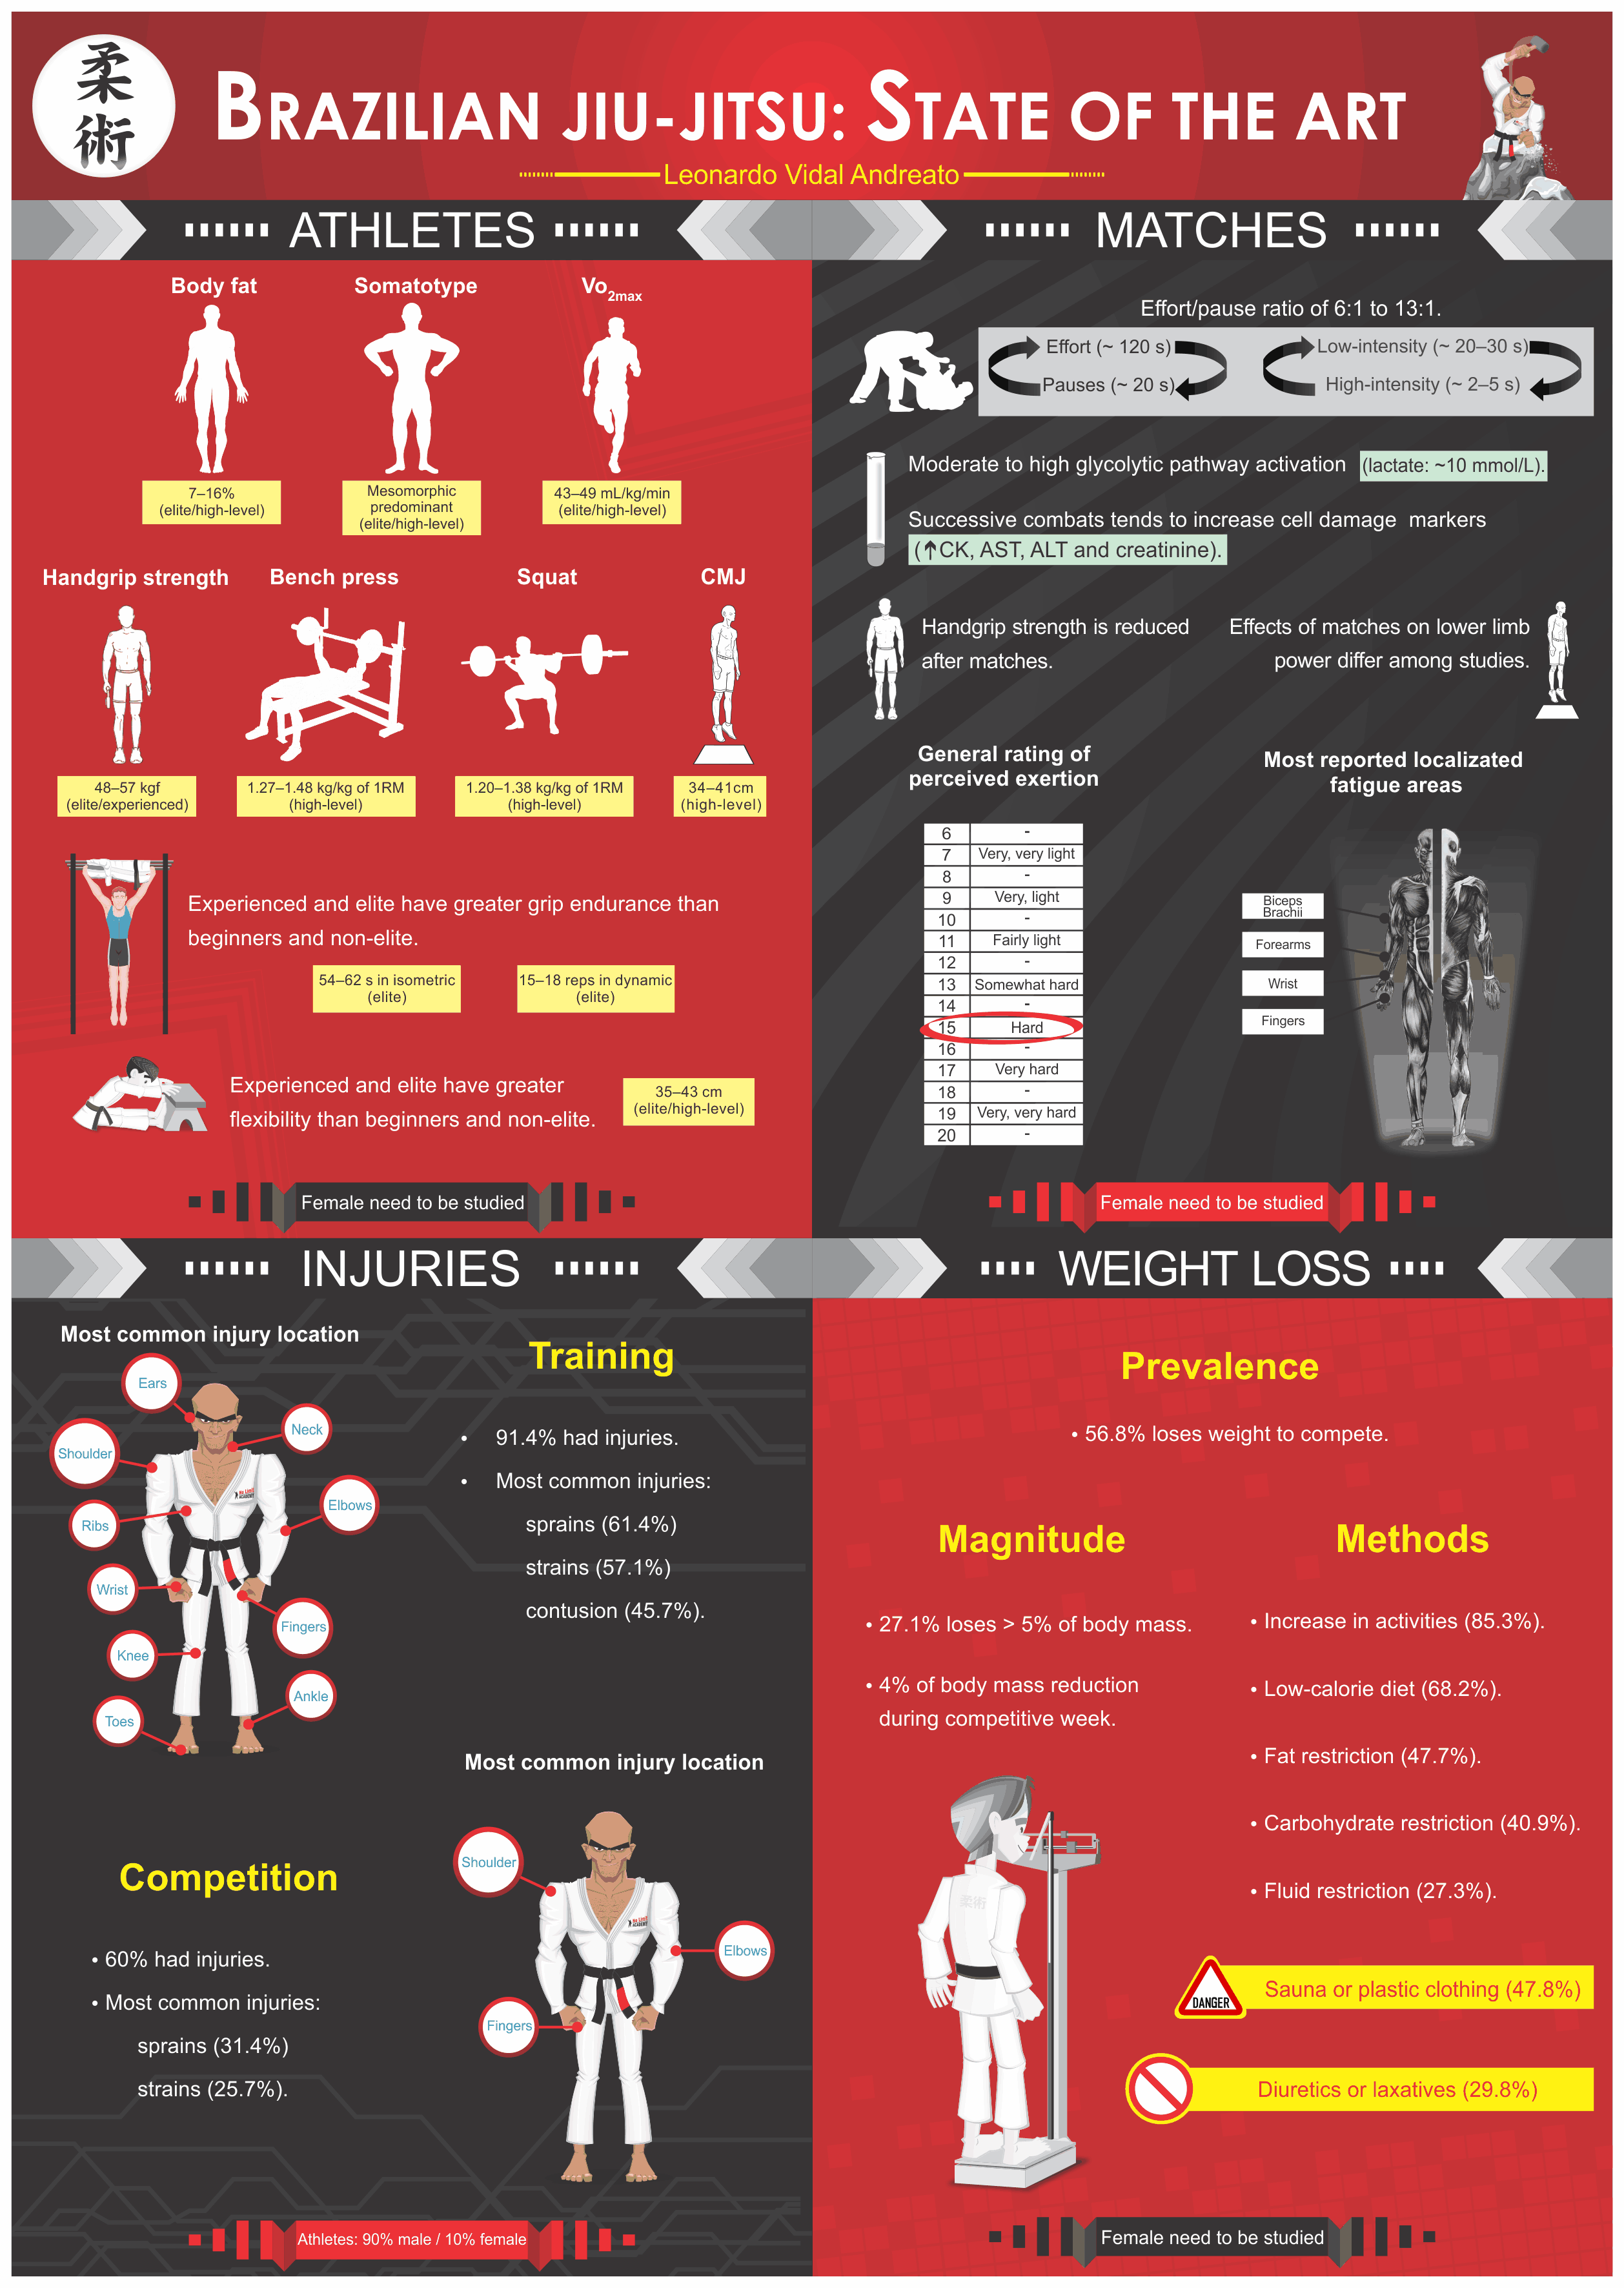 Brazilian jiu-jitsu: State of the art. A guide for Sports Medicine  Professionals - BJSM blog - social media's leading SEM voice